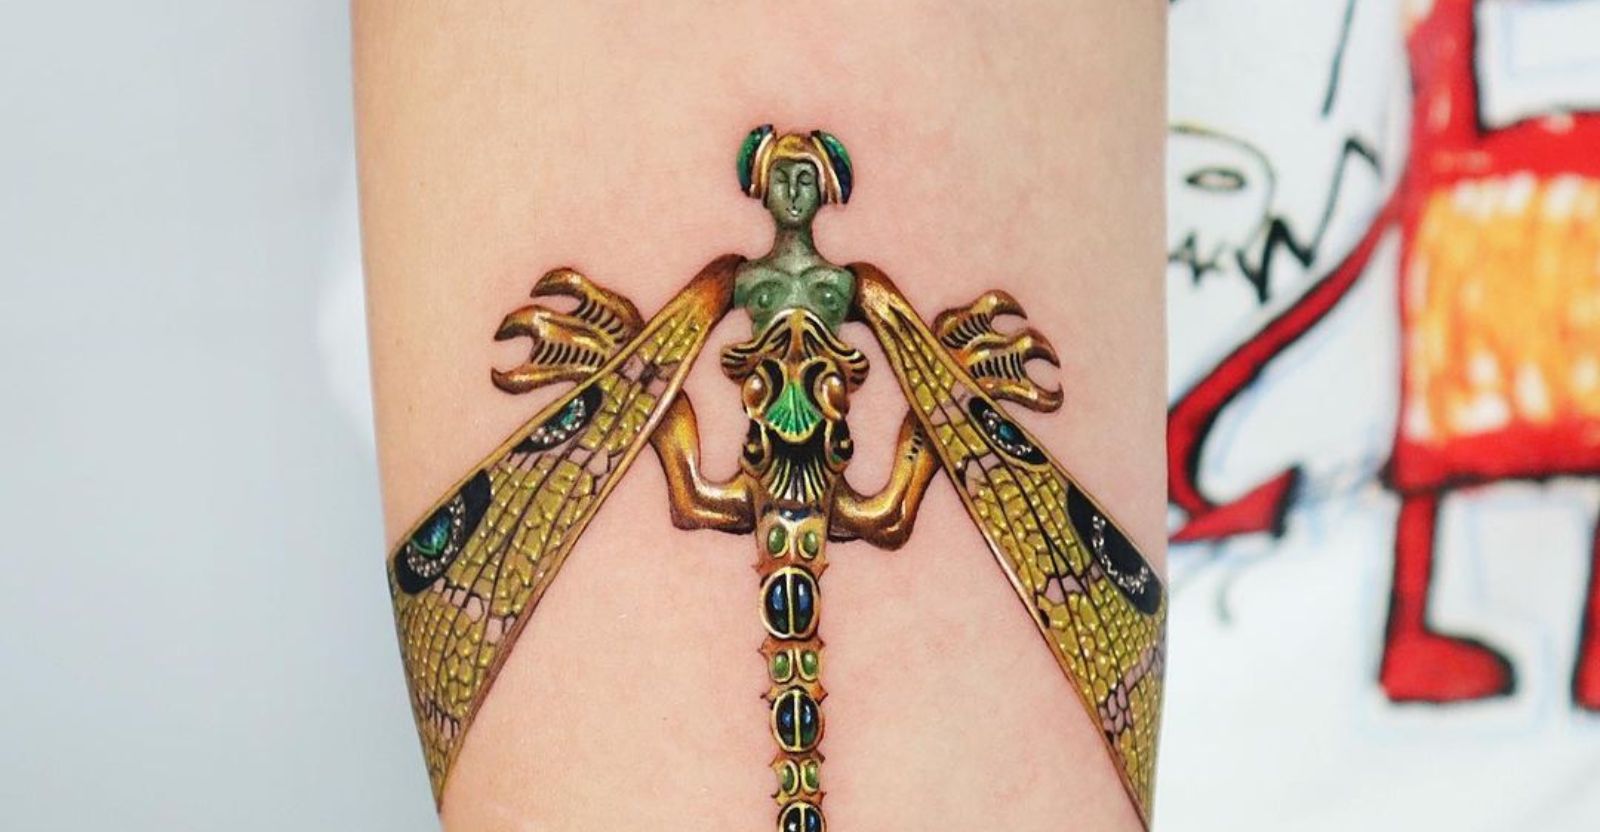 Insect tattoo | Insect tattoo, Lady bug tattoo, Sleeve tattoos